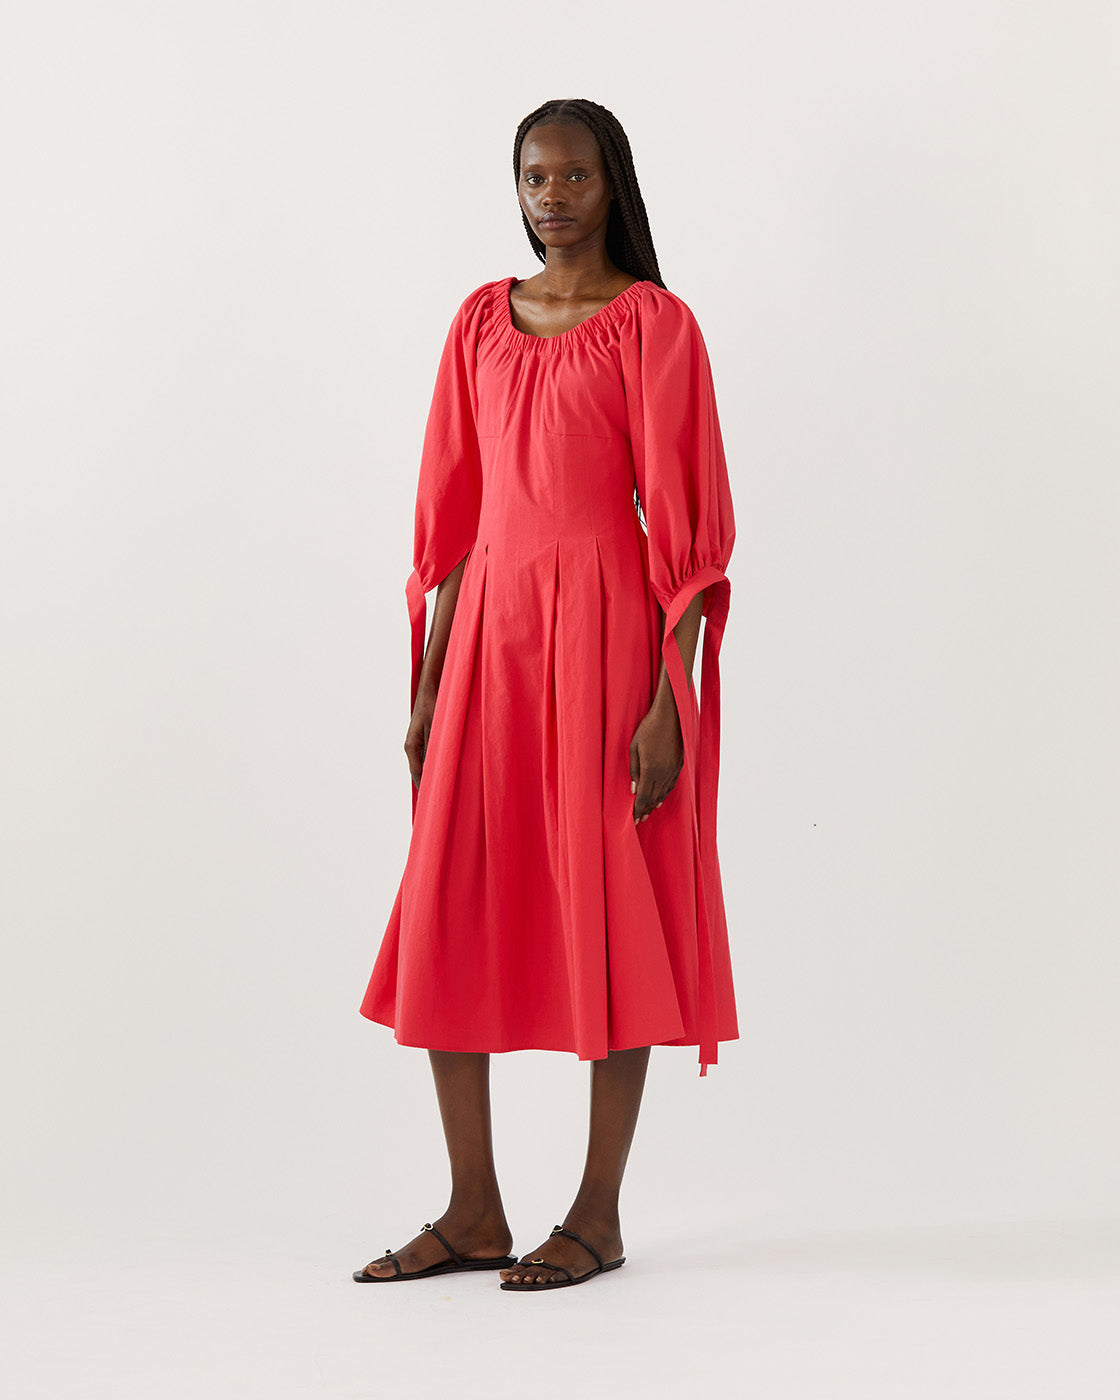 Greta Dress Organic Cotton Red